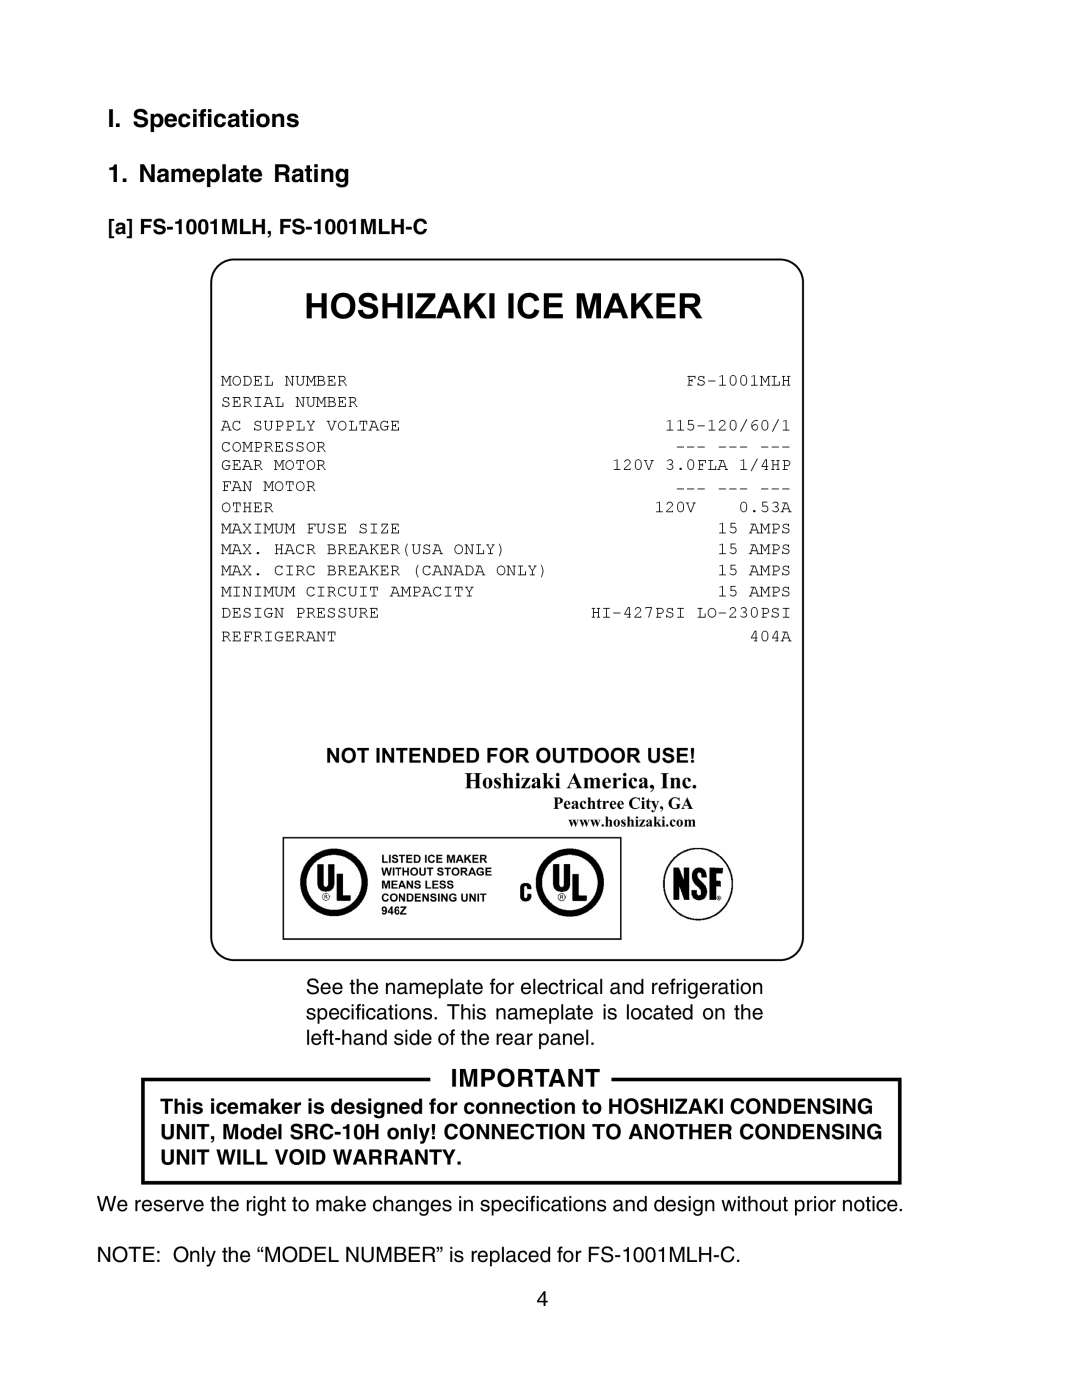 Hoshizaki SRC-10H instruction manual I. Specifications 1. Nameplate Rating, Hoshizaki Ice Maker 